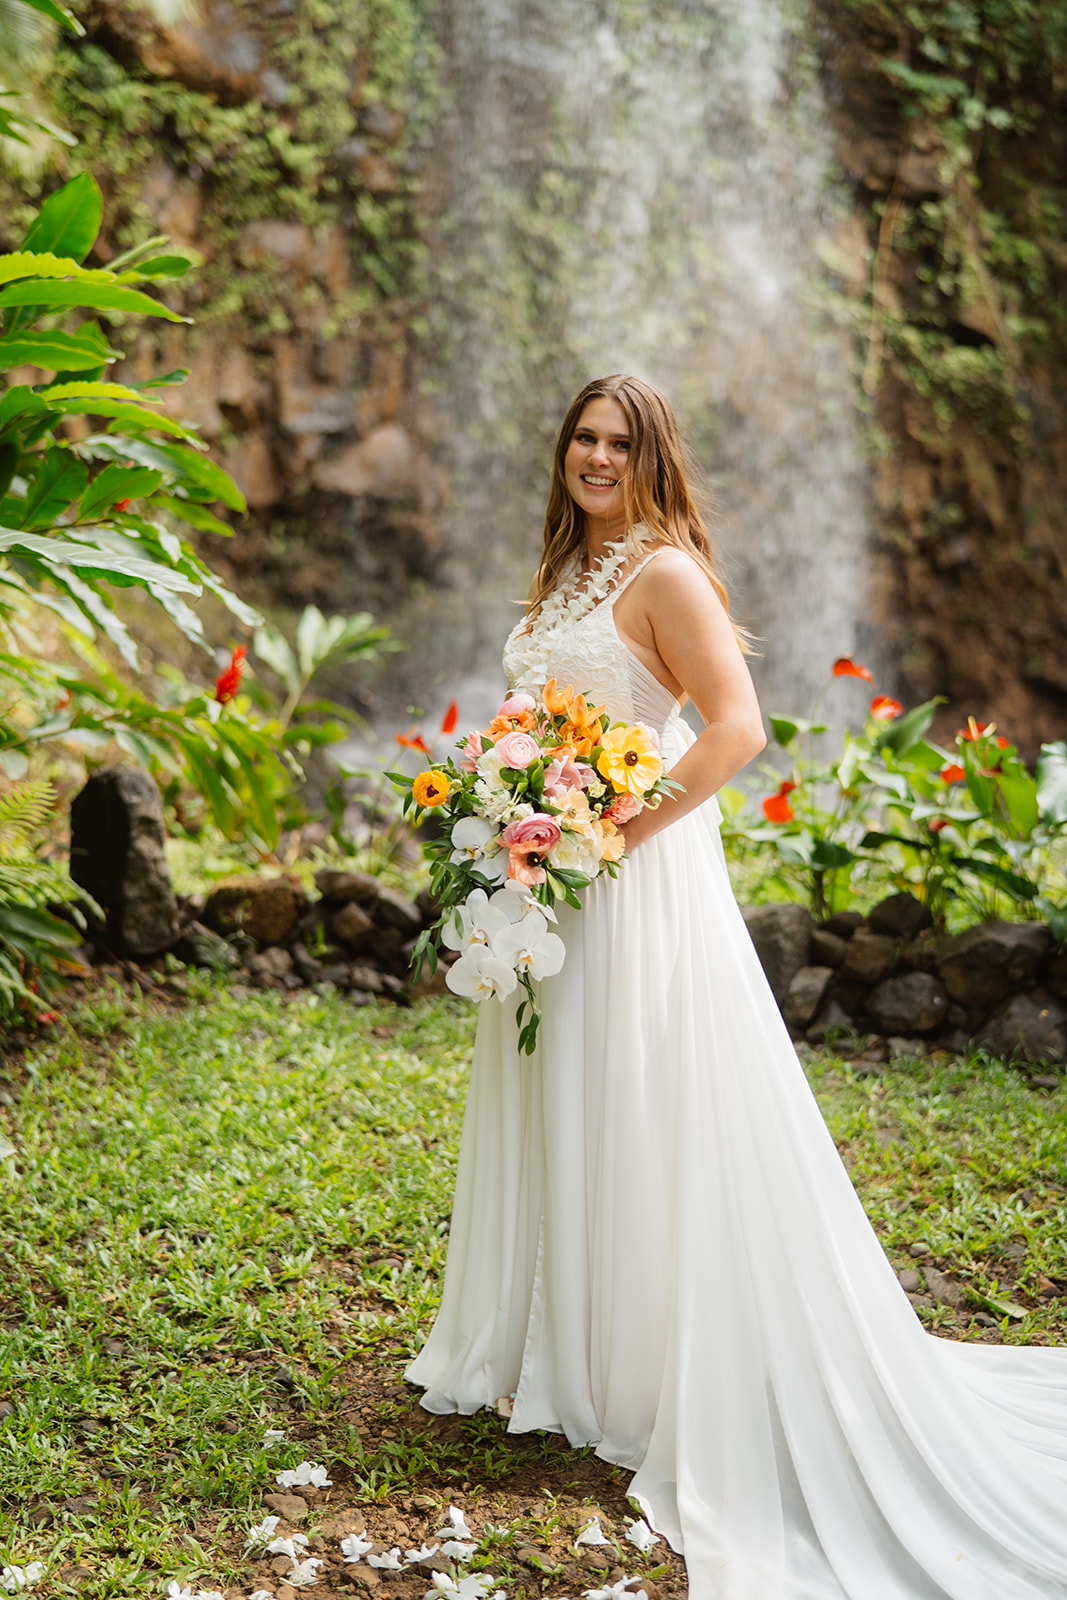 Kauai waterfall elopement